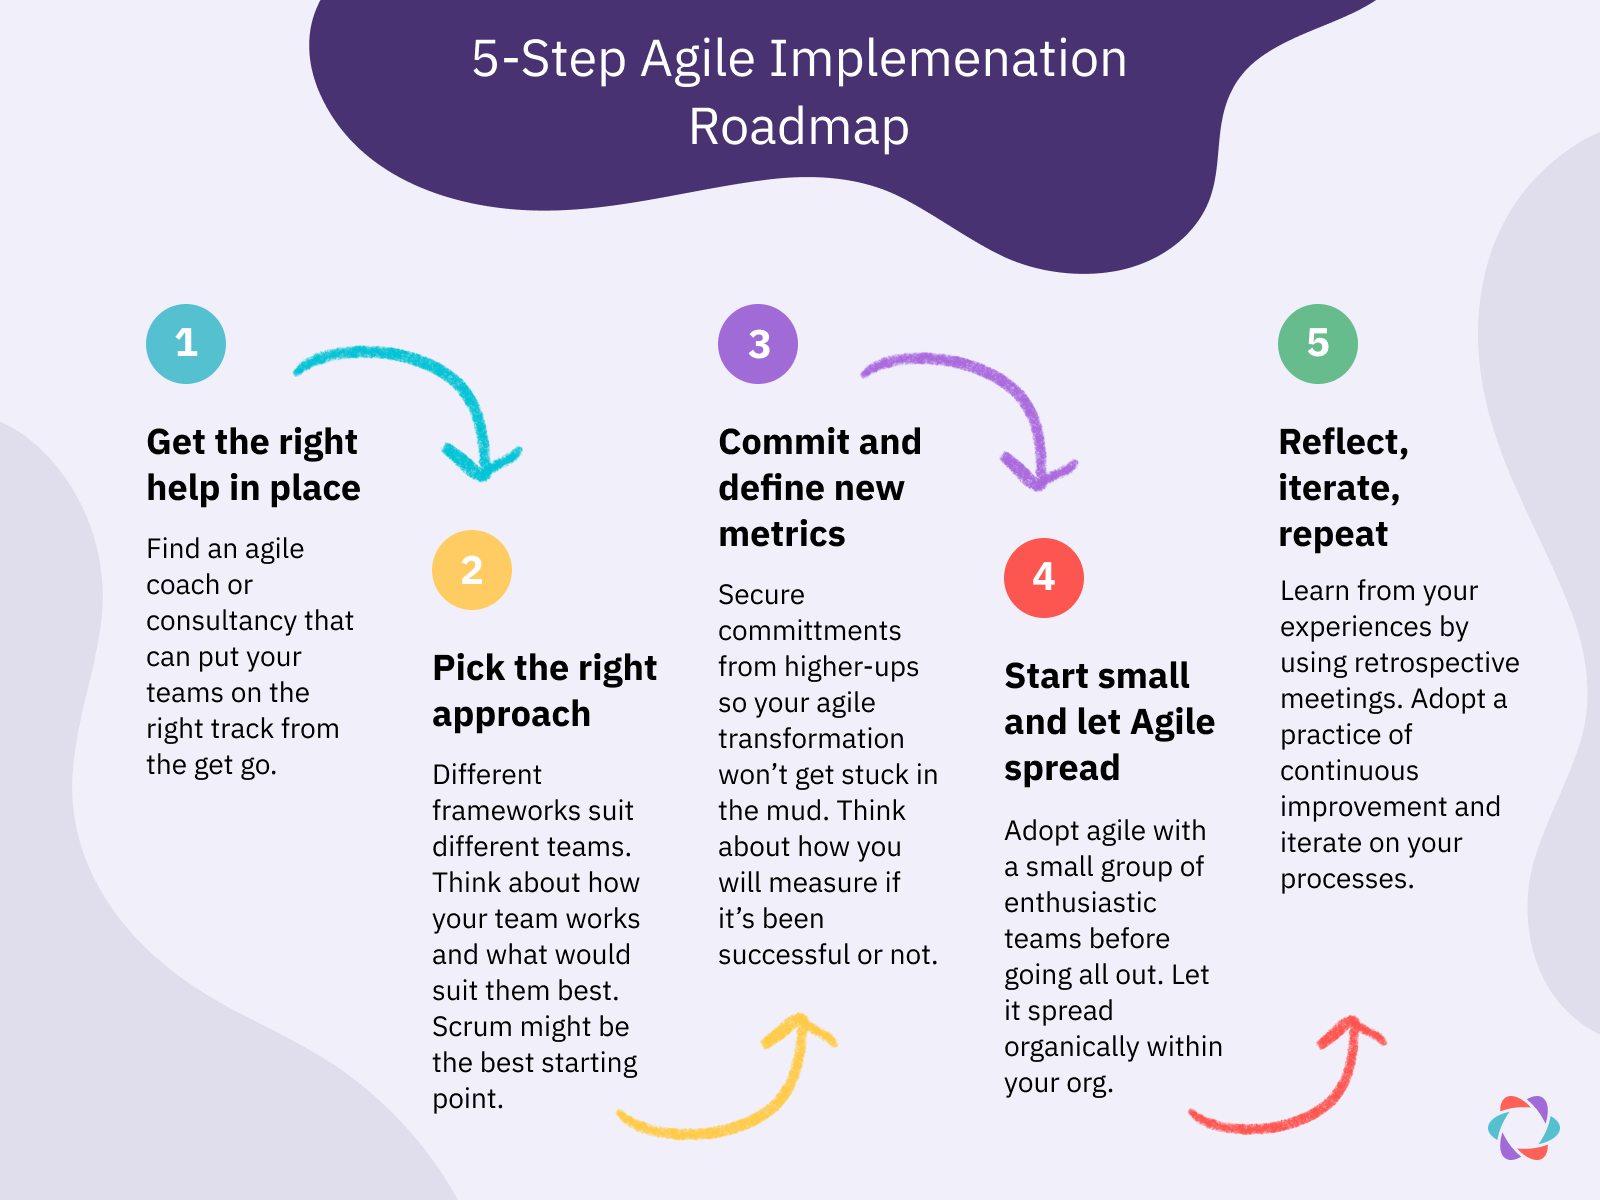 Agile Implementation Roadmap Guide for Teams